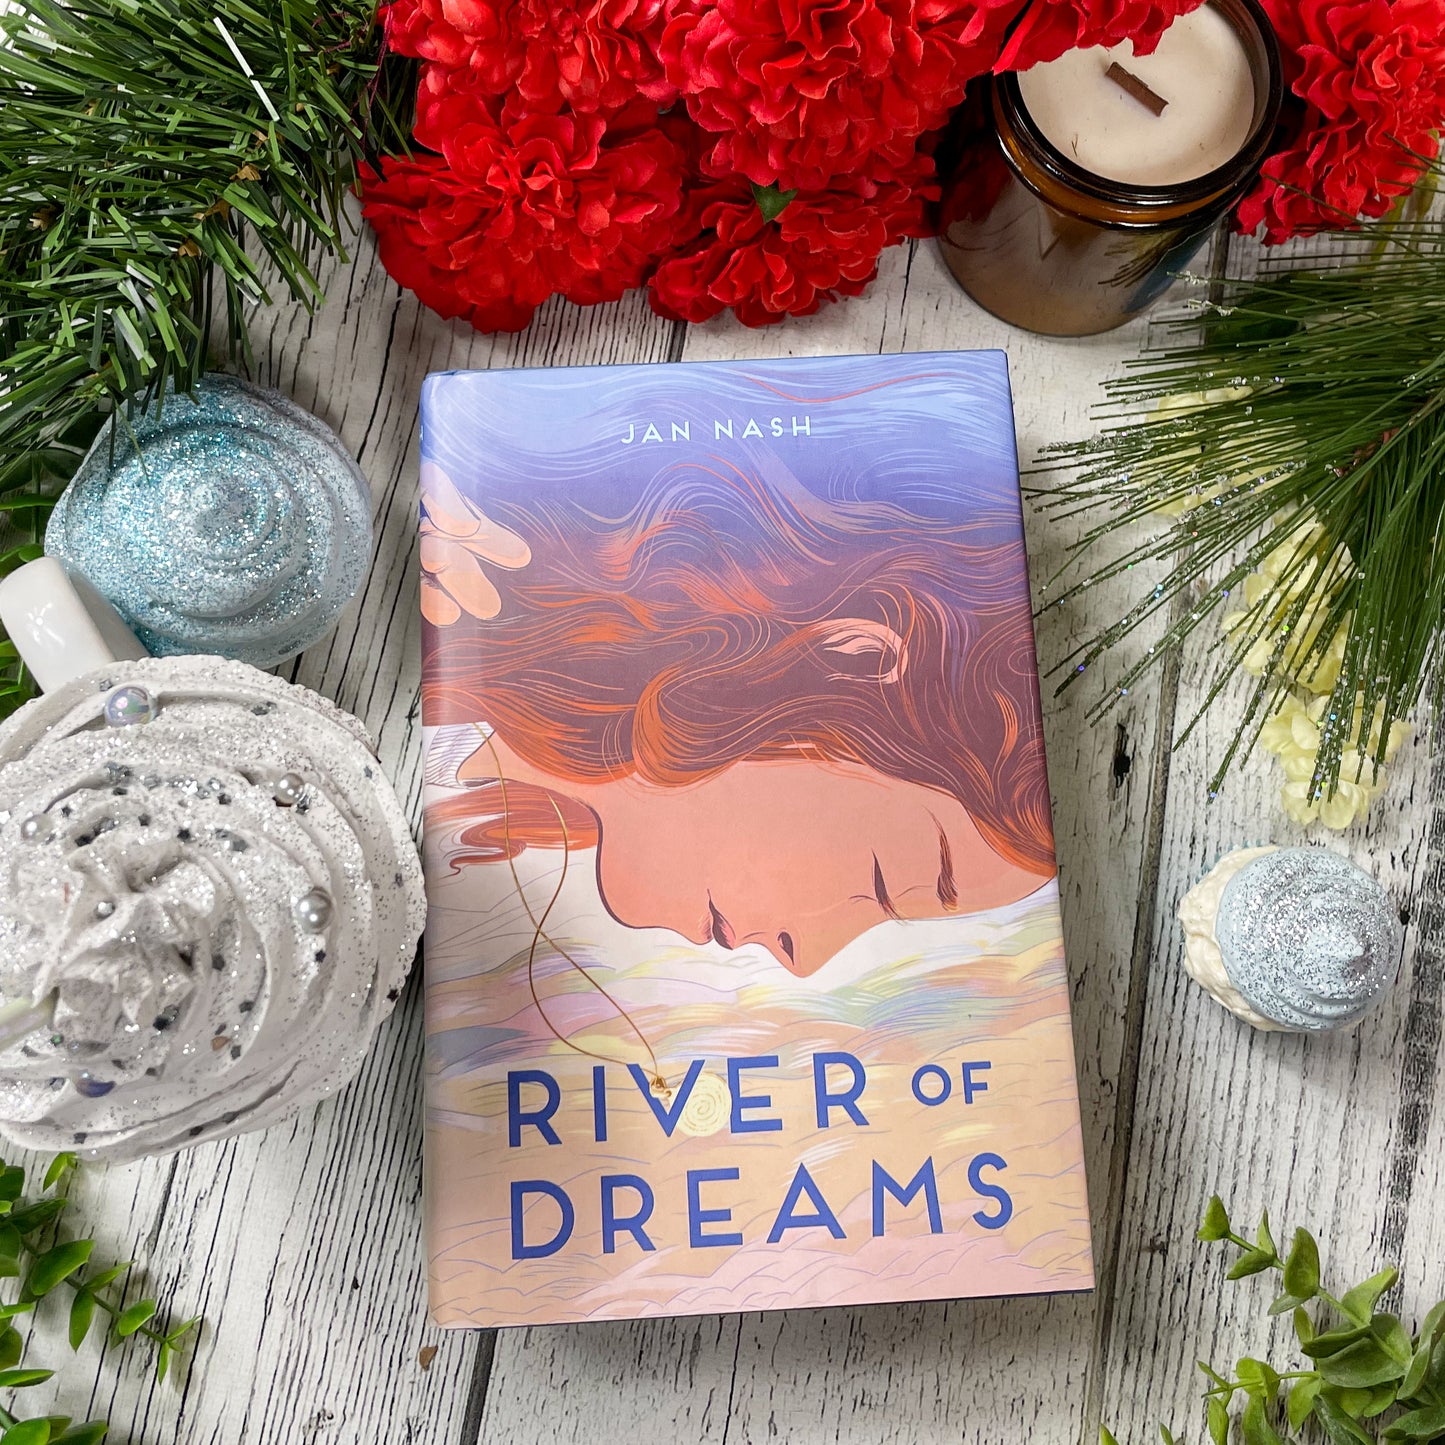 River of Dreams by Jan Nash